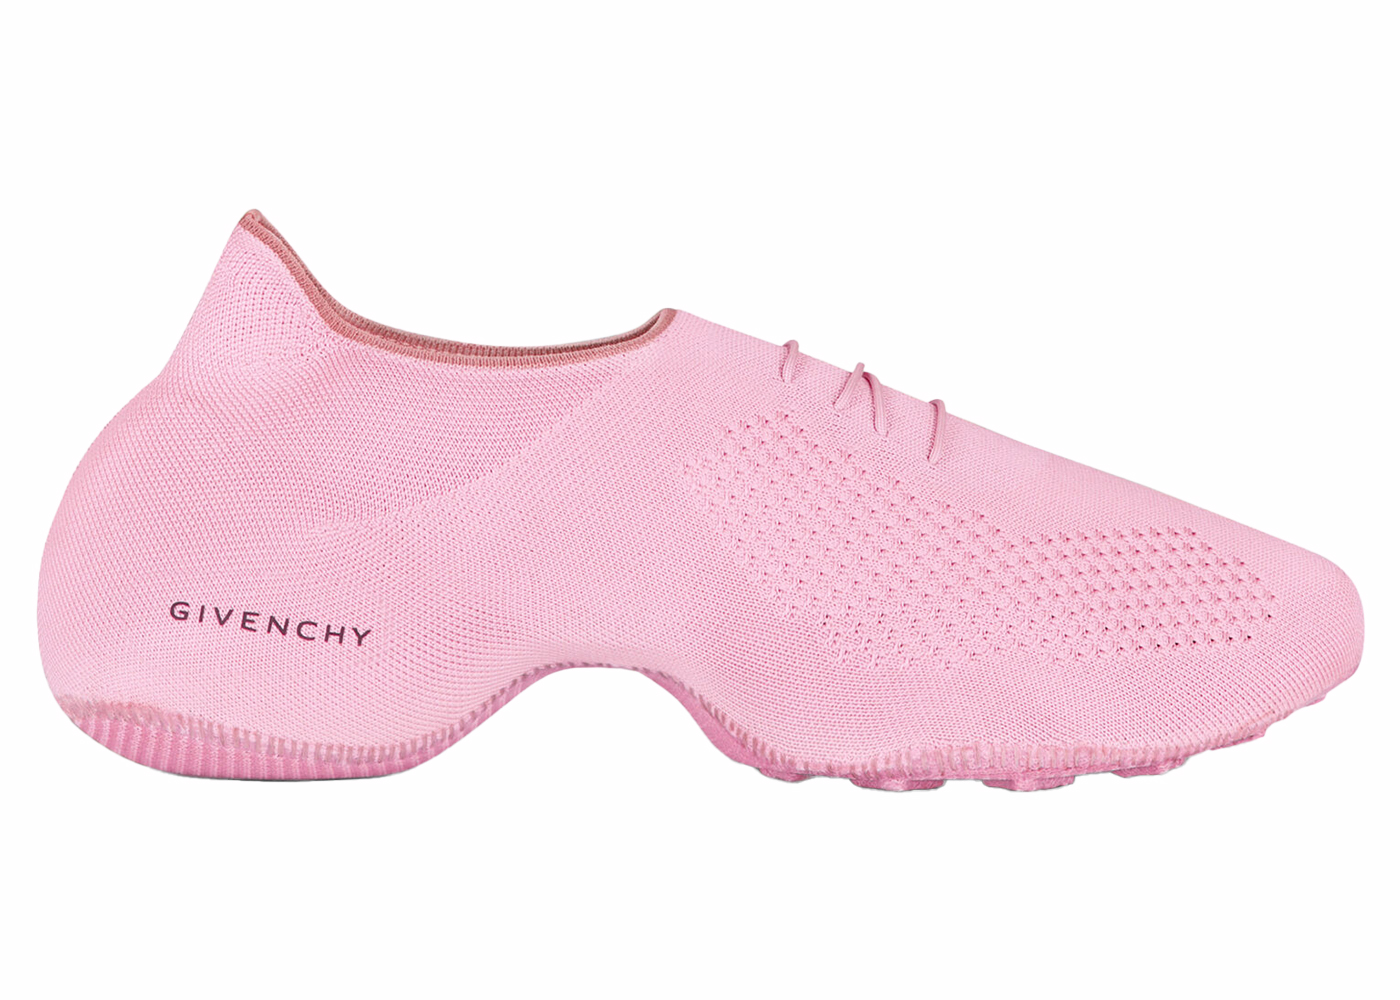 Givenchy TK-360 Sneaker Pink (Women's) - BE002VE1HC-681 - US